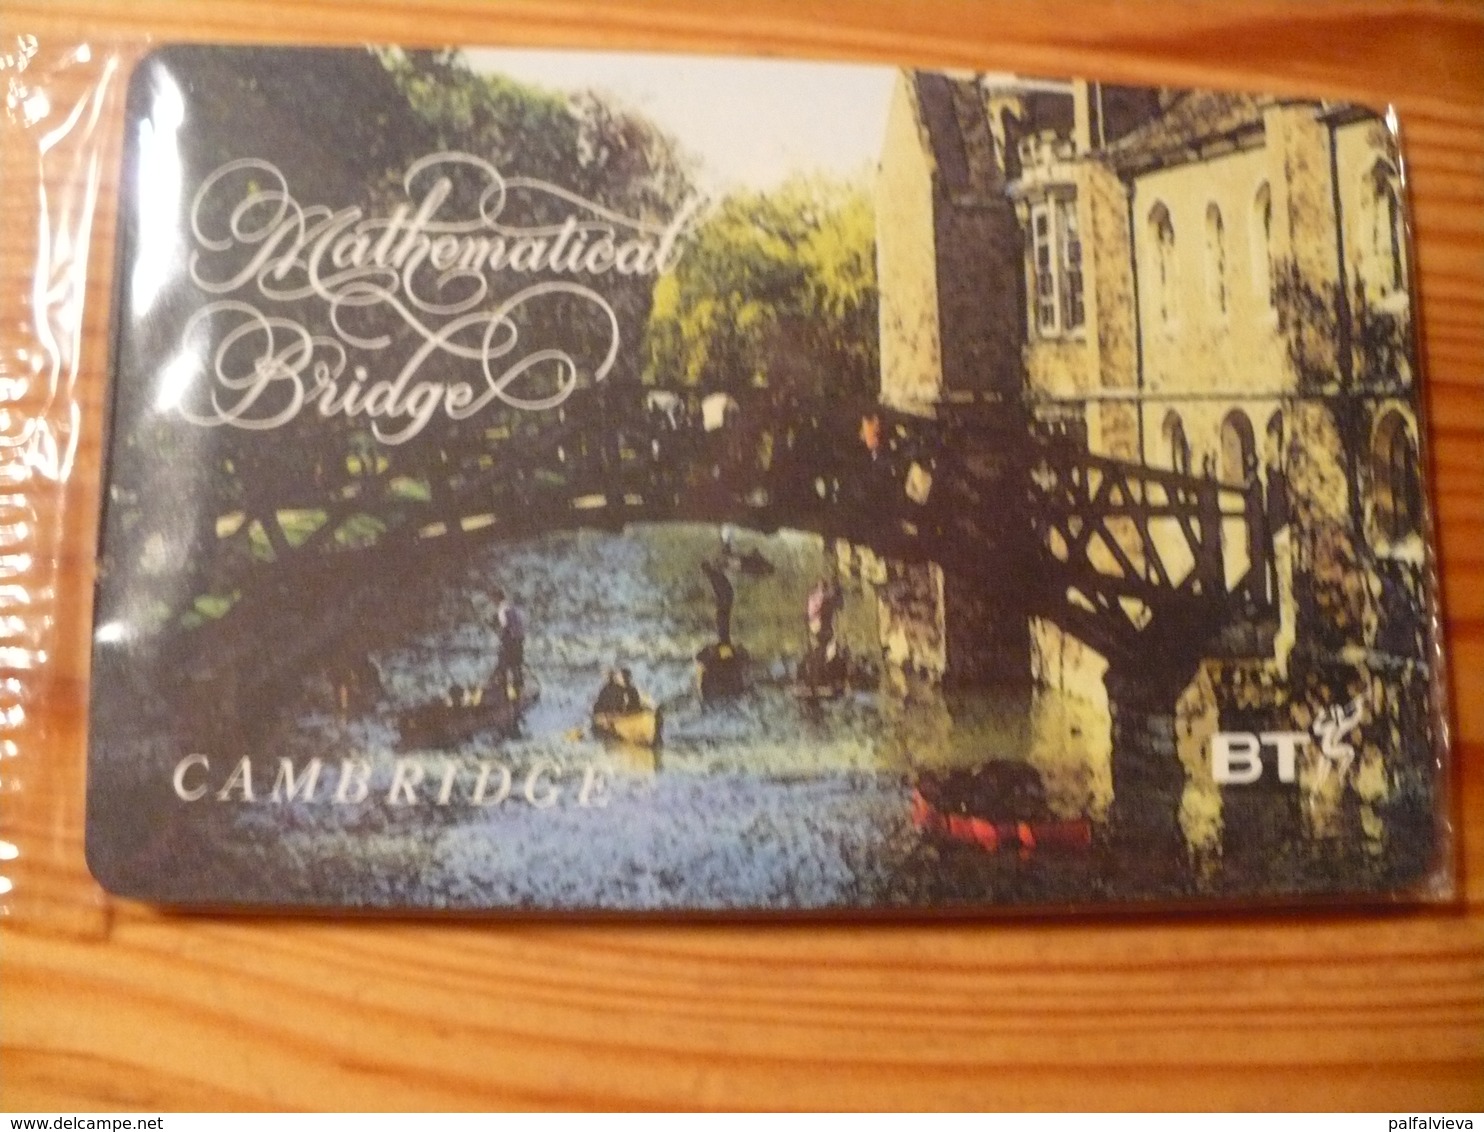 Phonecard United Kingdom, BT - Cambridge, Matchematical Bridge - BT General